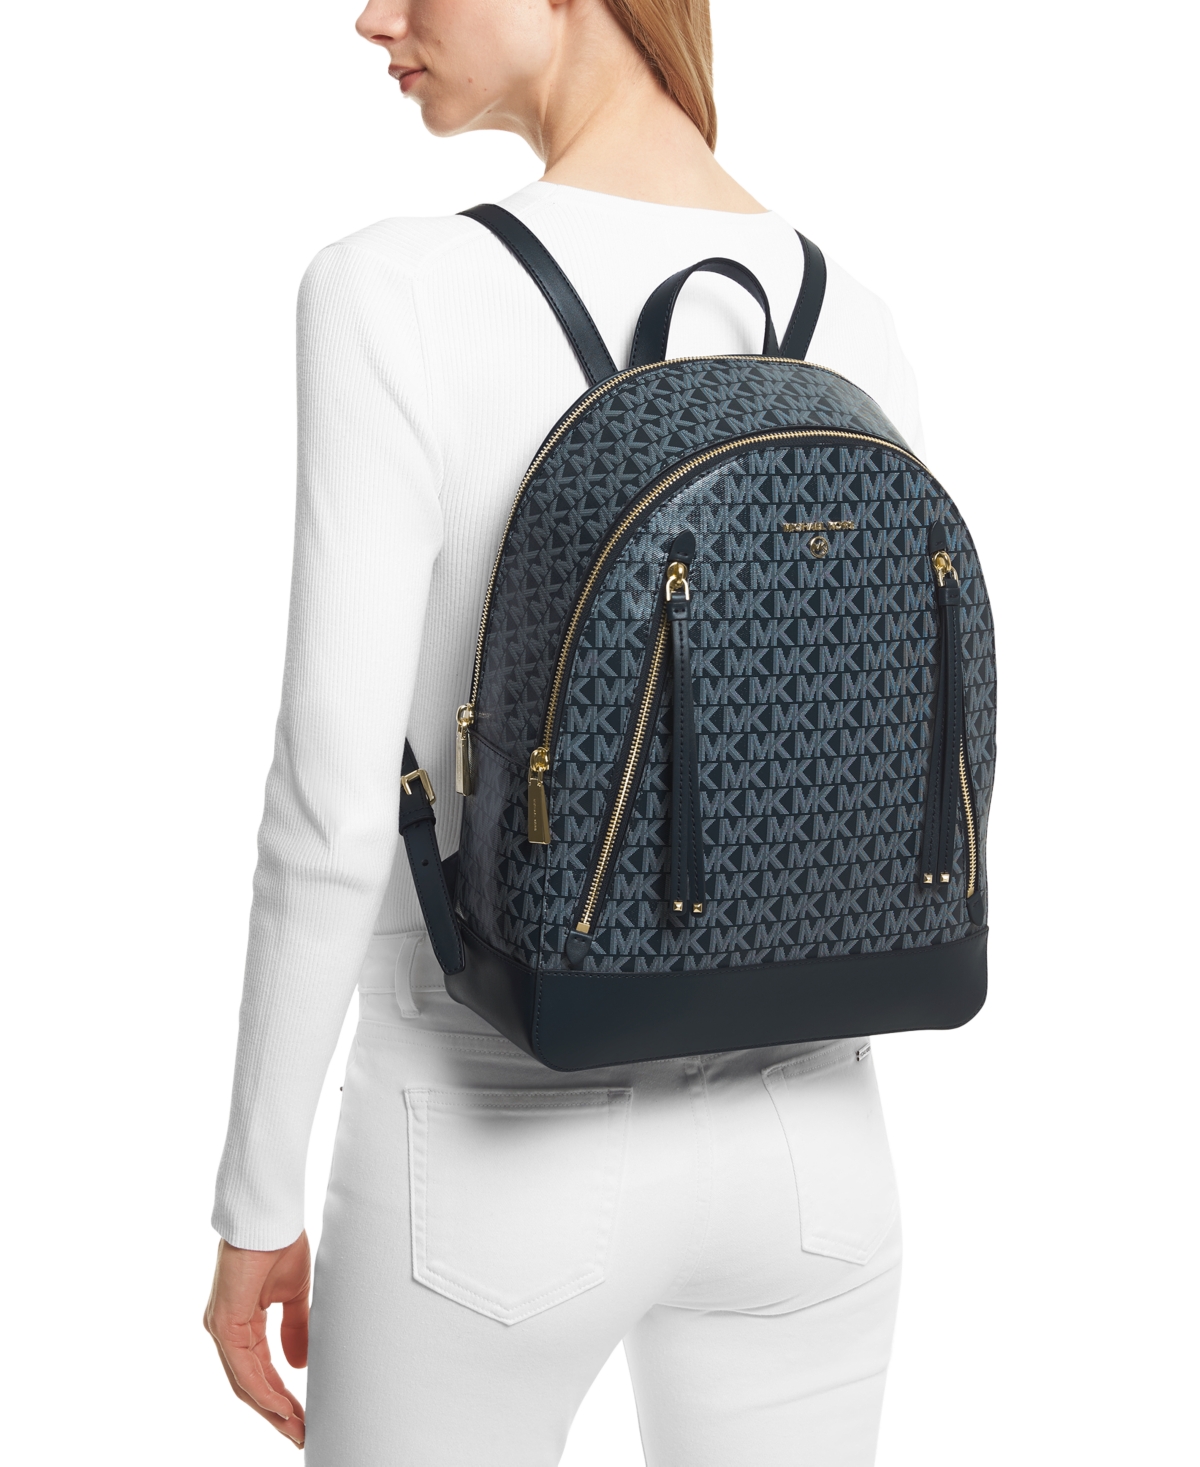 Sale - Women's Michael Kors Backpacks ideas: up to −61%